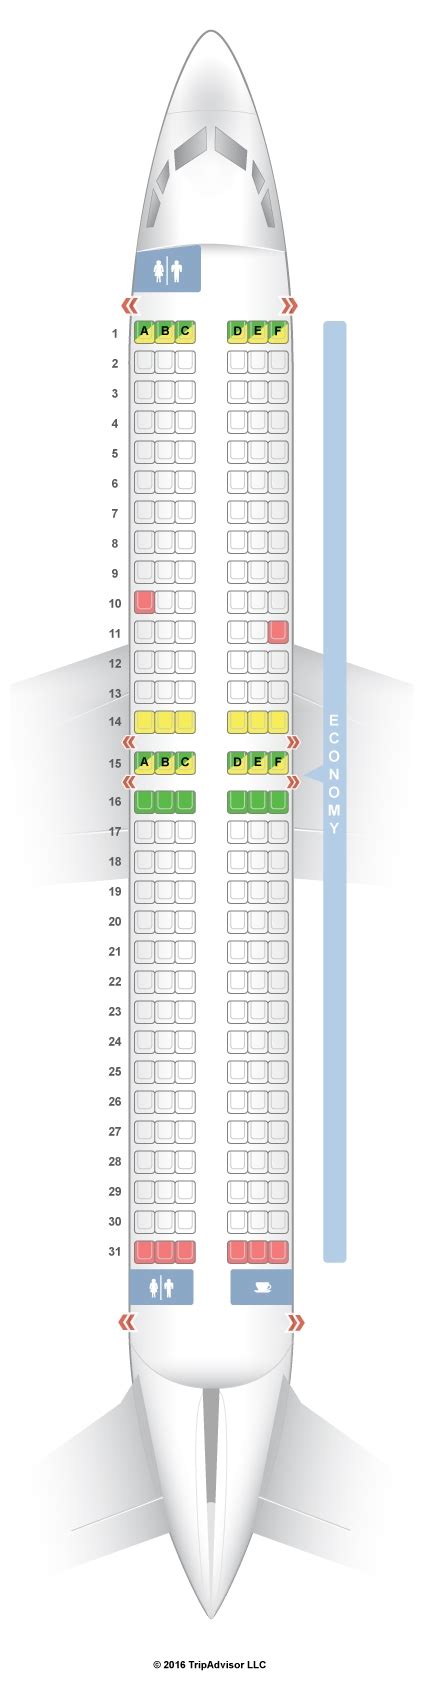 norwegian air boeing 737-800 seating plan